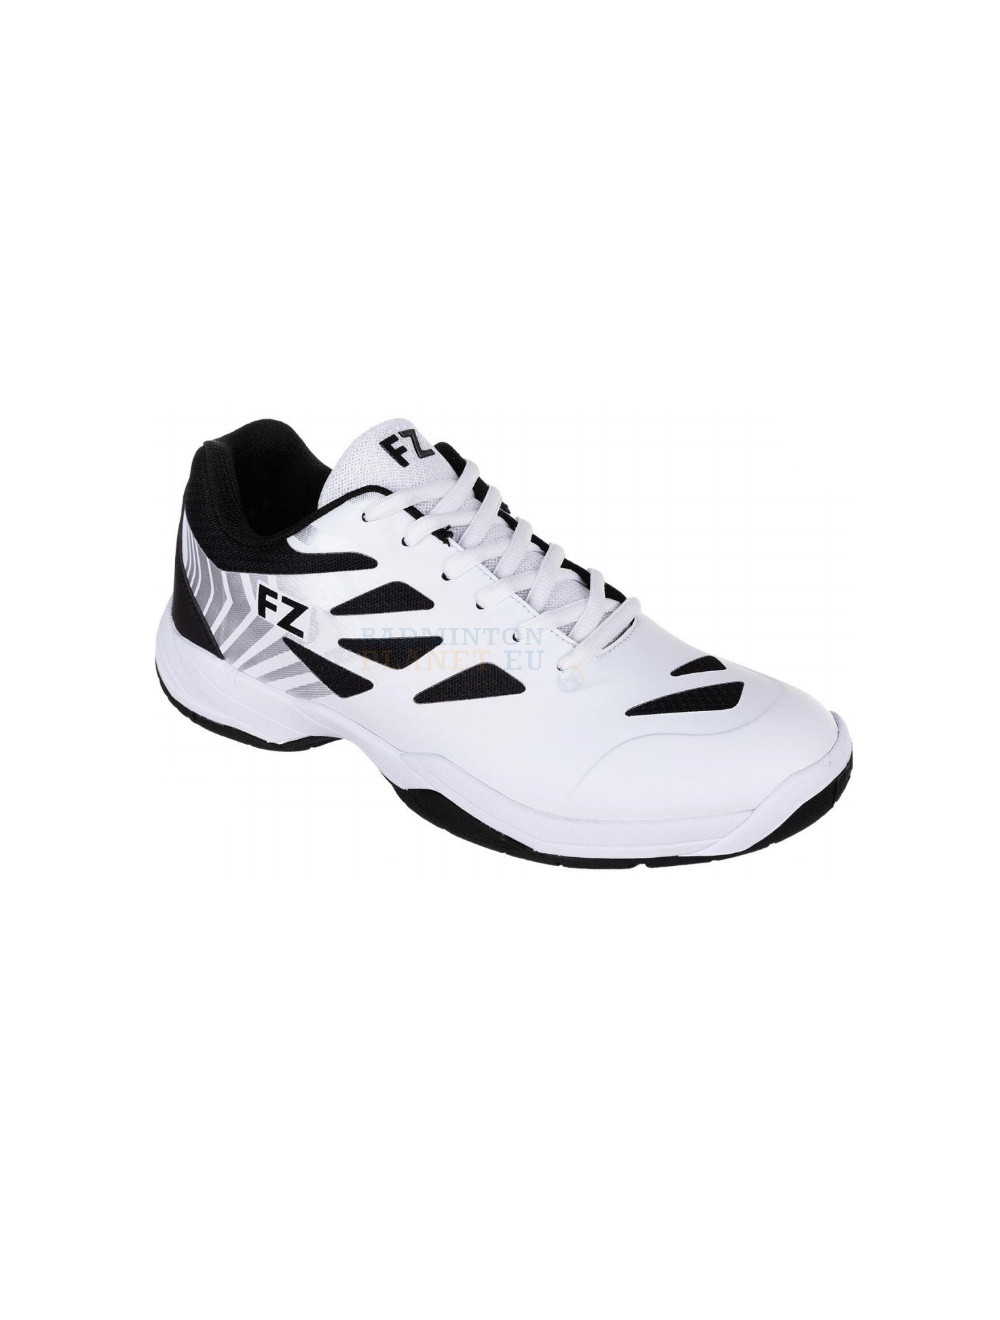 FZ Forza Leander V2 M White/Black badminton shoe? - Badmintonplanet.eu